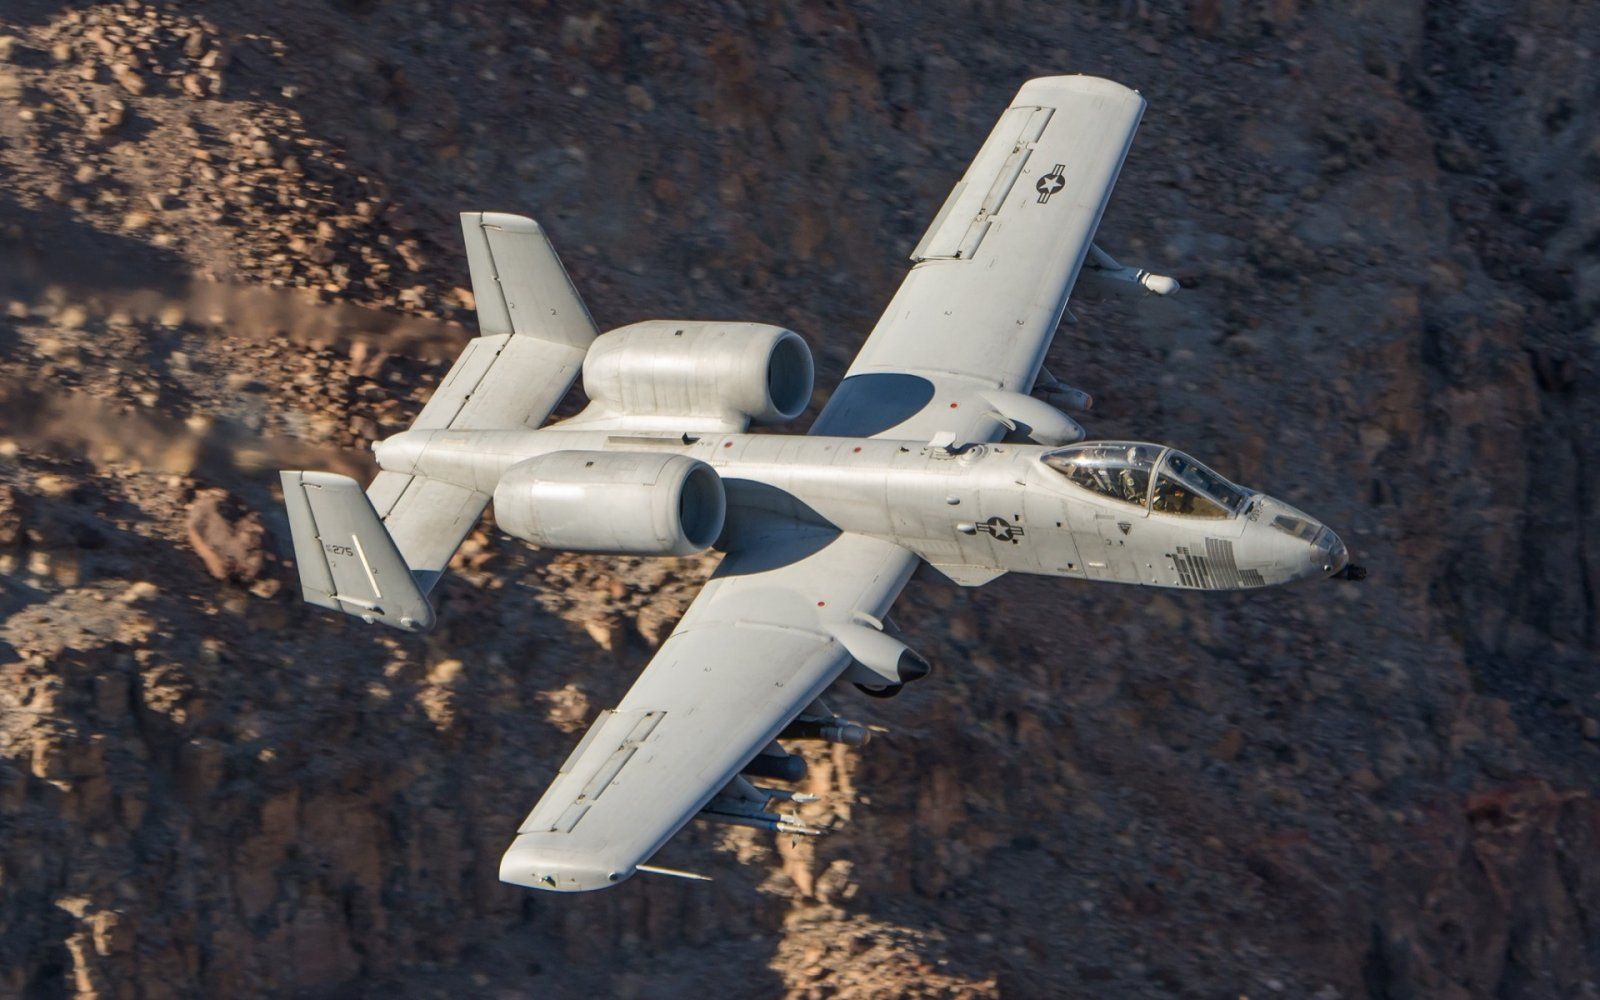 fairchild-republic-a-10-thunderbolt-ii-a-10c-american-attack-aircraft-usaf-us-military-aircraft.jpg